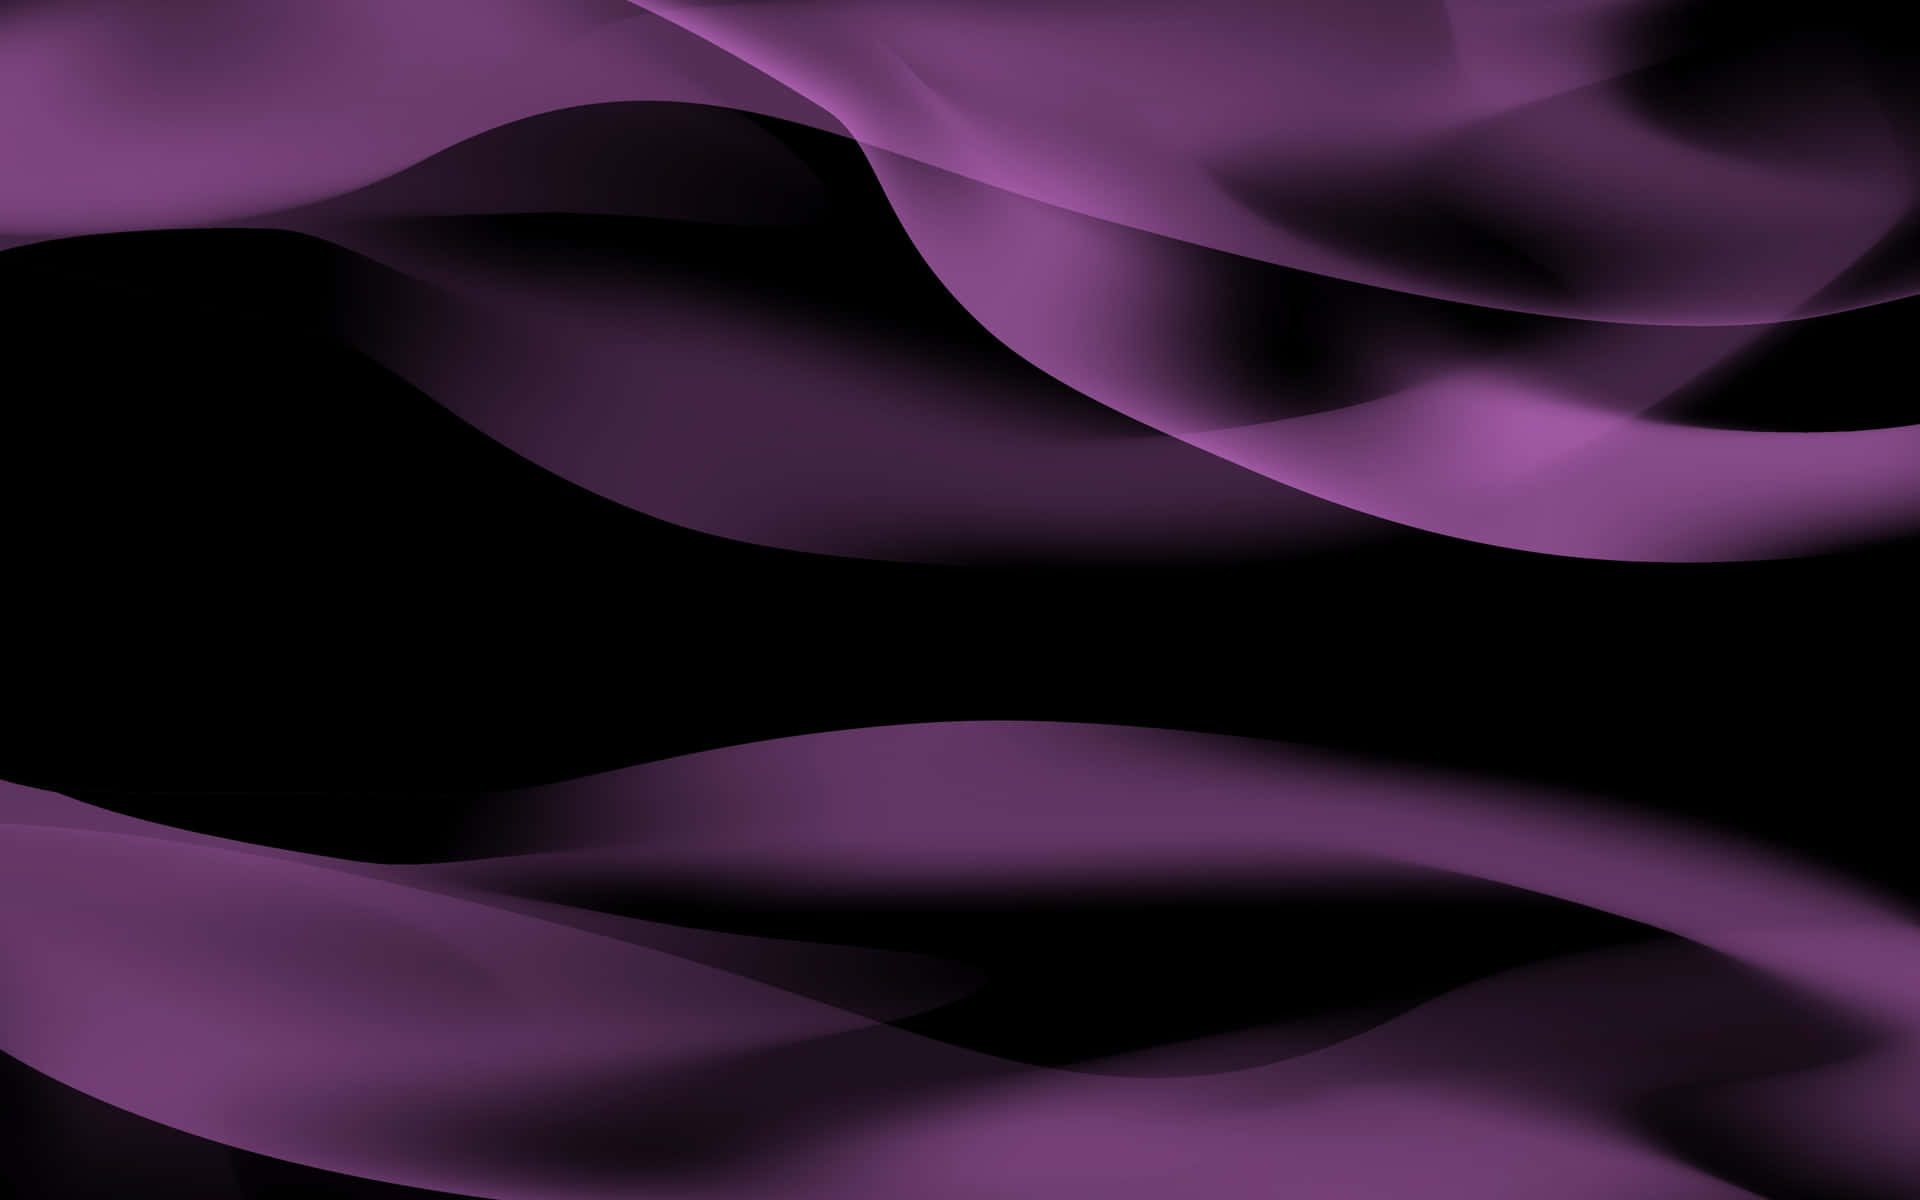 A Swirling Purple Smoke Against a Dark Background